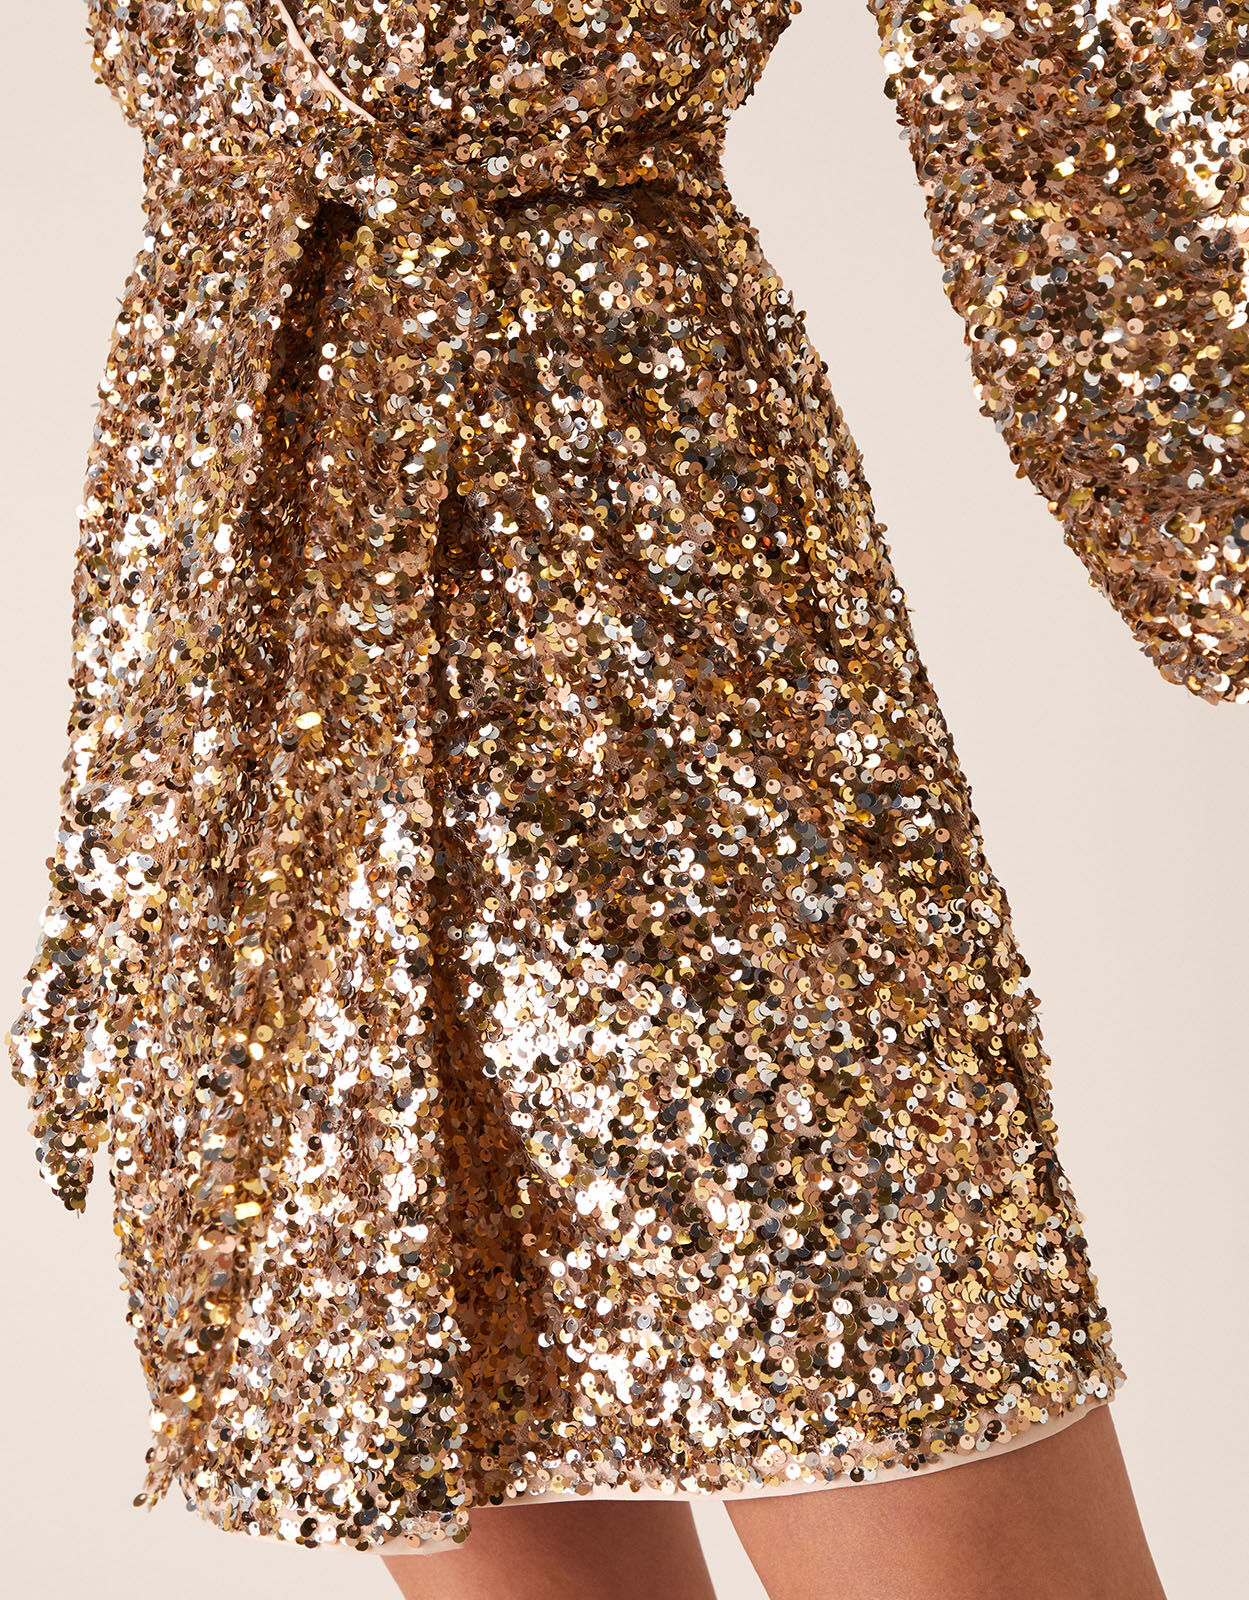 Jennifer Sequin Stretch Wrap Dress Gold | Casual \u0026 Day Dresses | Monsoon  Global.